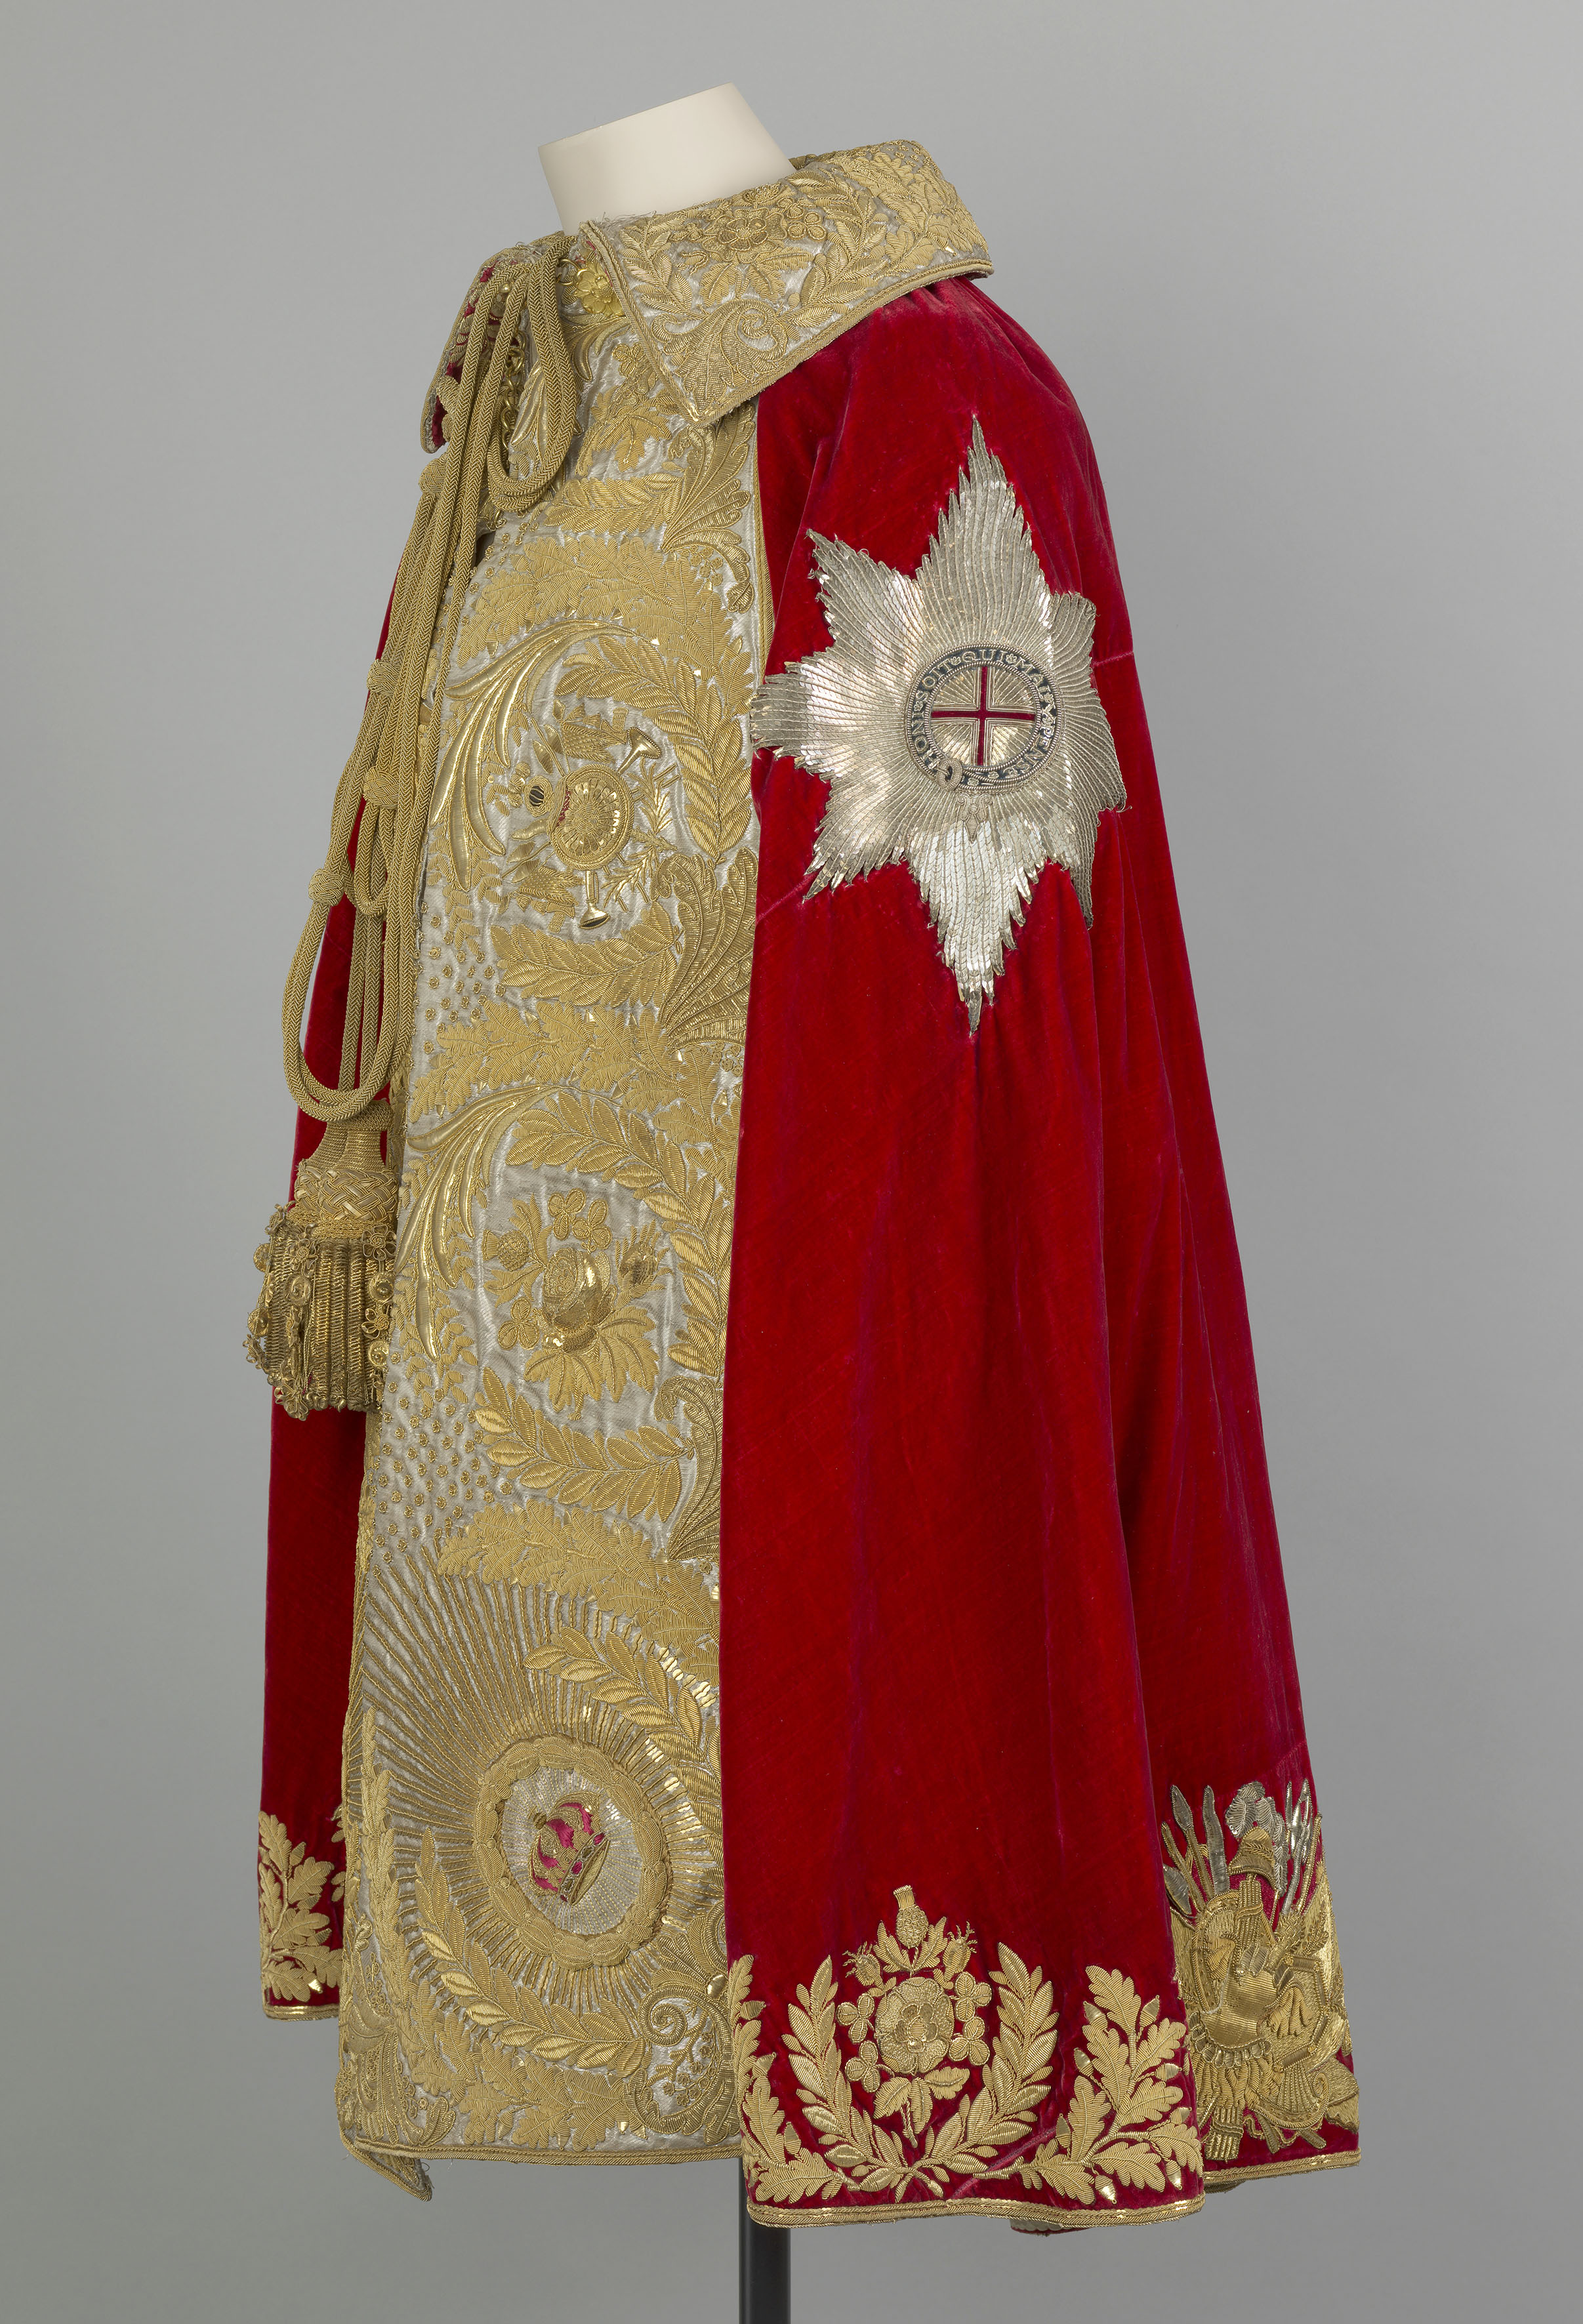 George IV's Surcoat 